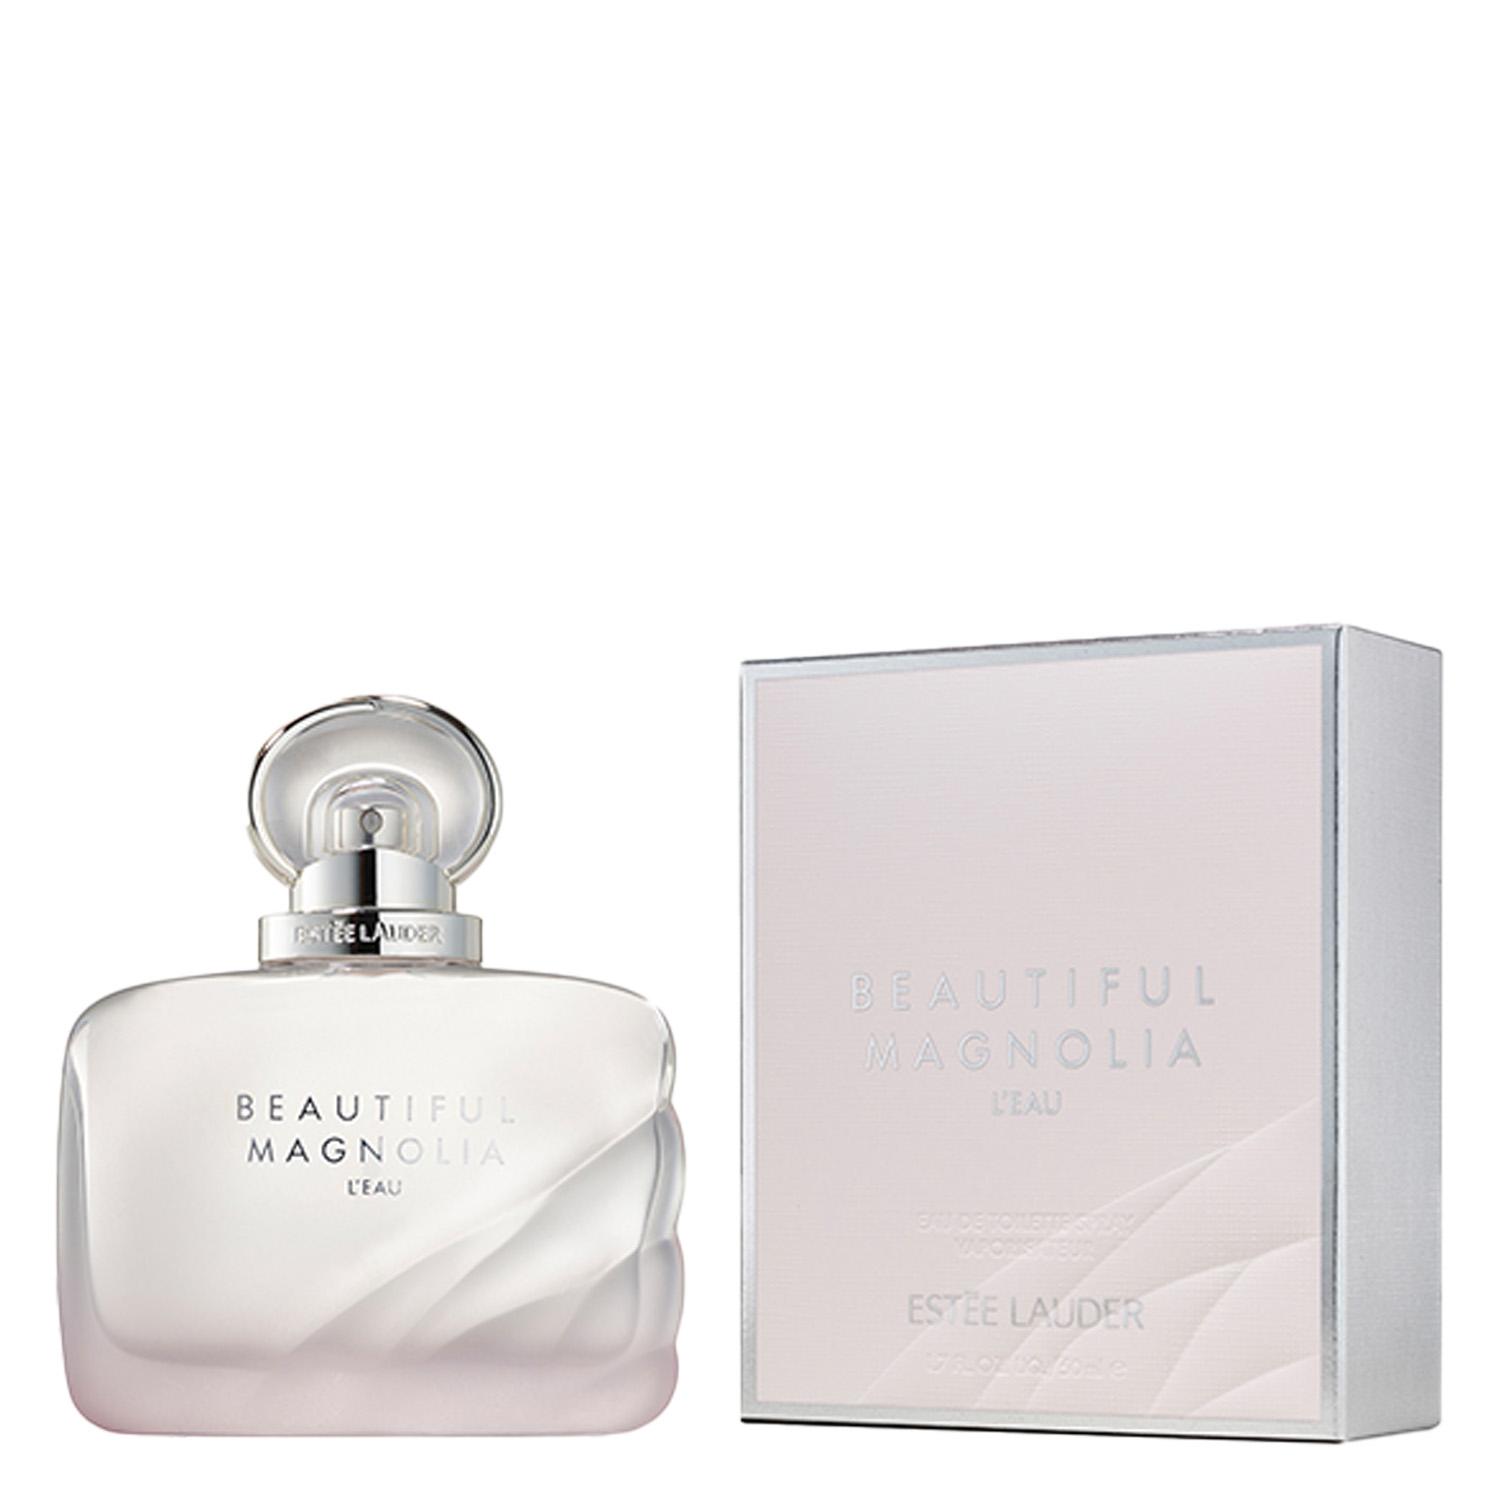 Beautiful Magnolia - L'Eau de Toilette